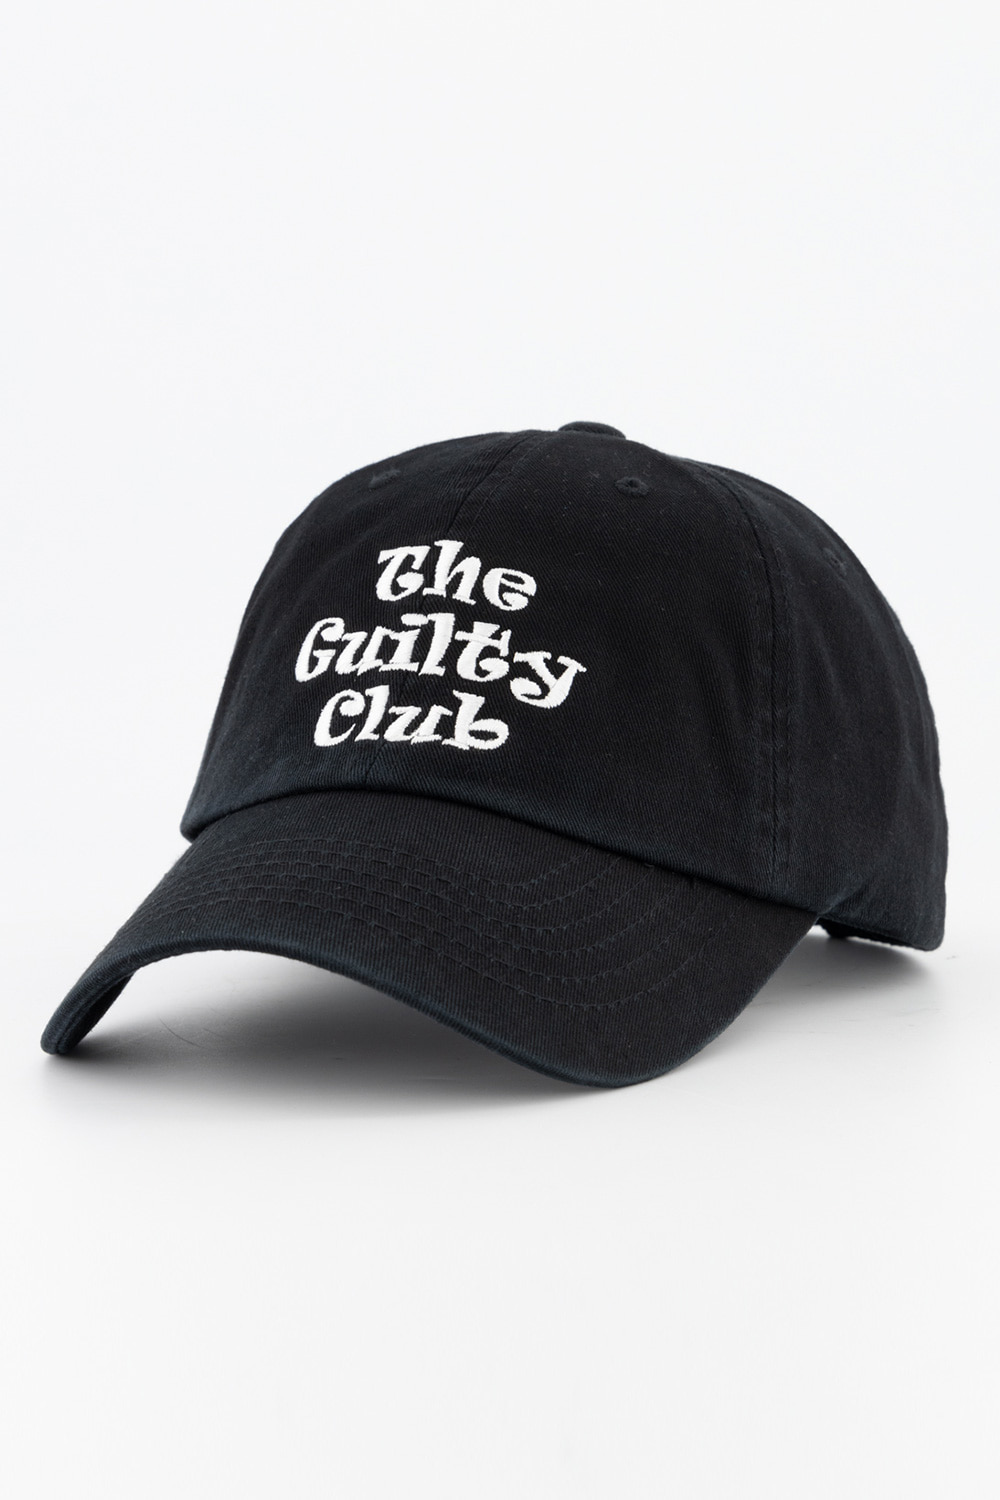 THE GUILTY CLUB  Ball Cap Black